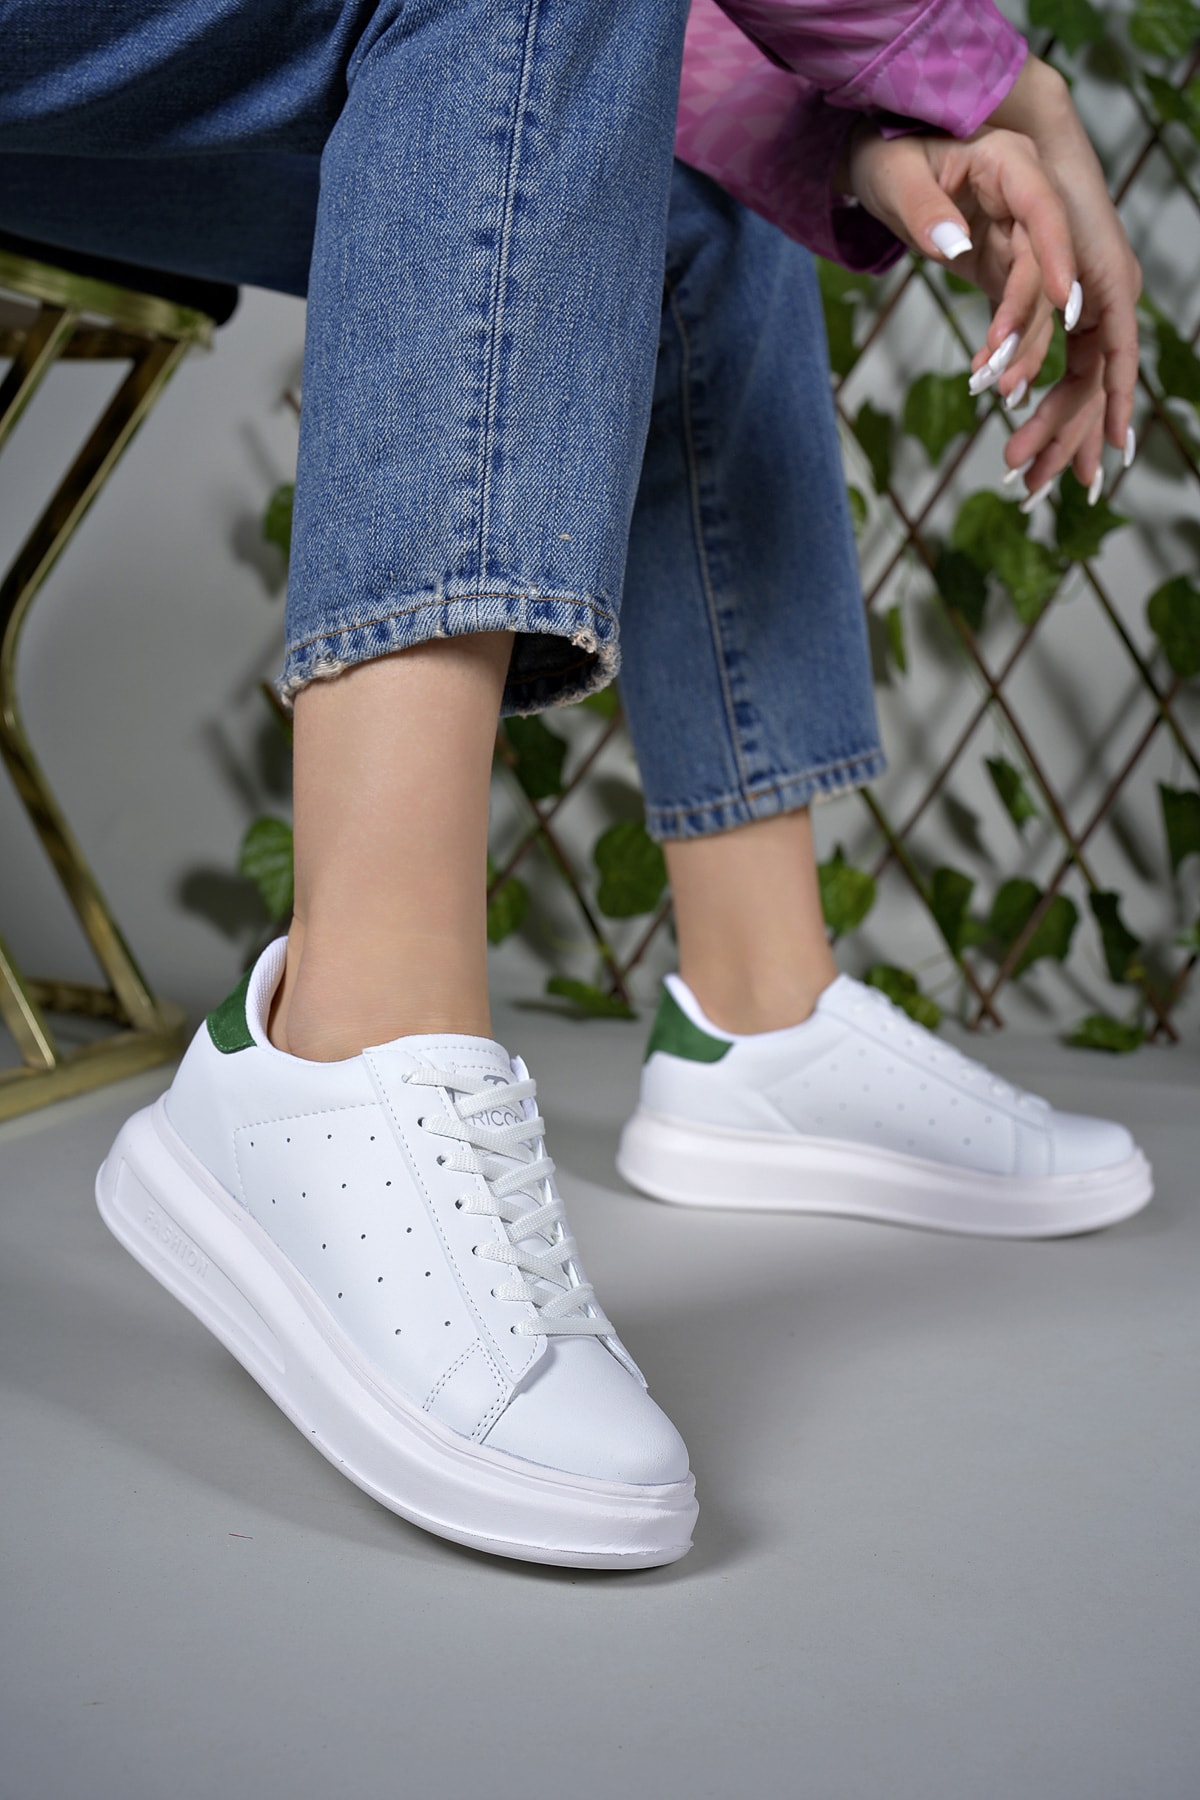 Riccon Women's Sneakers 0012156 White Green Skin